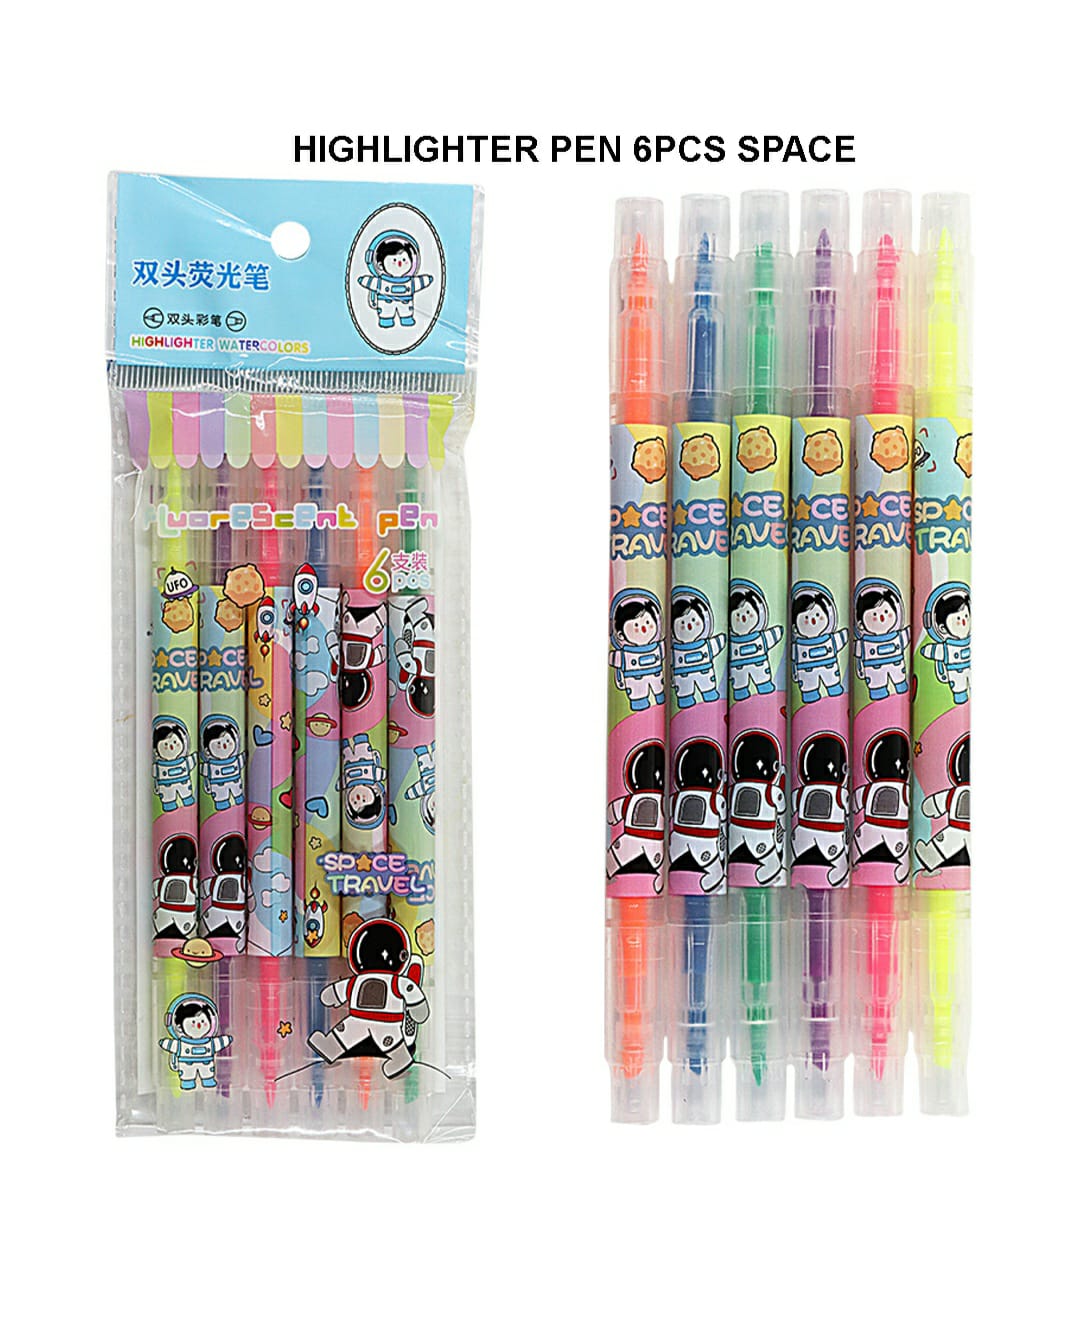 Highlighter Pen 6Pcs Space Qbt2778-1 | INKARTO